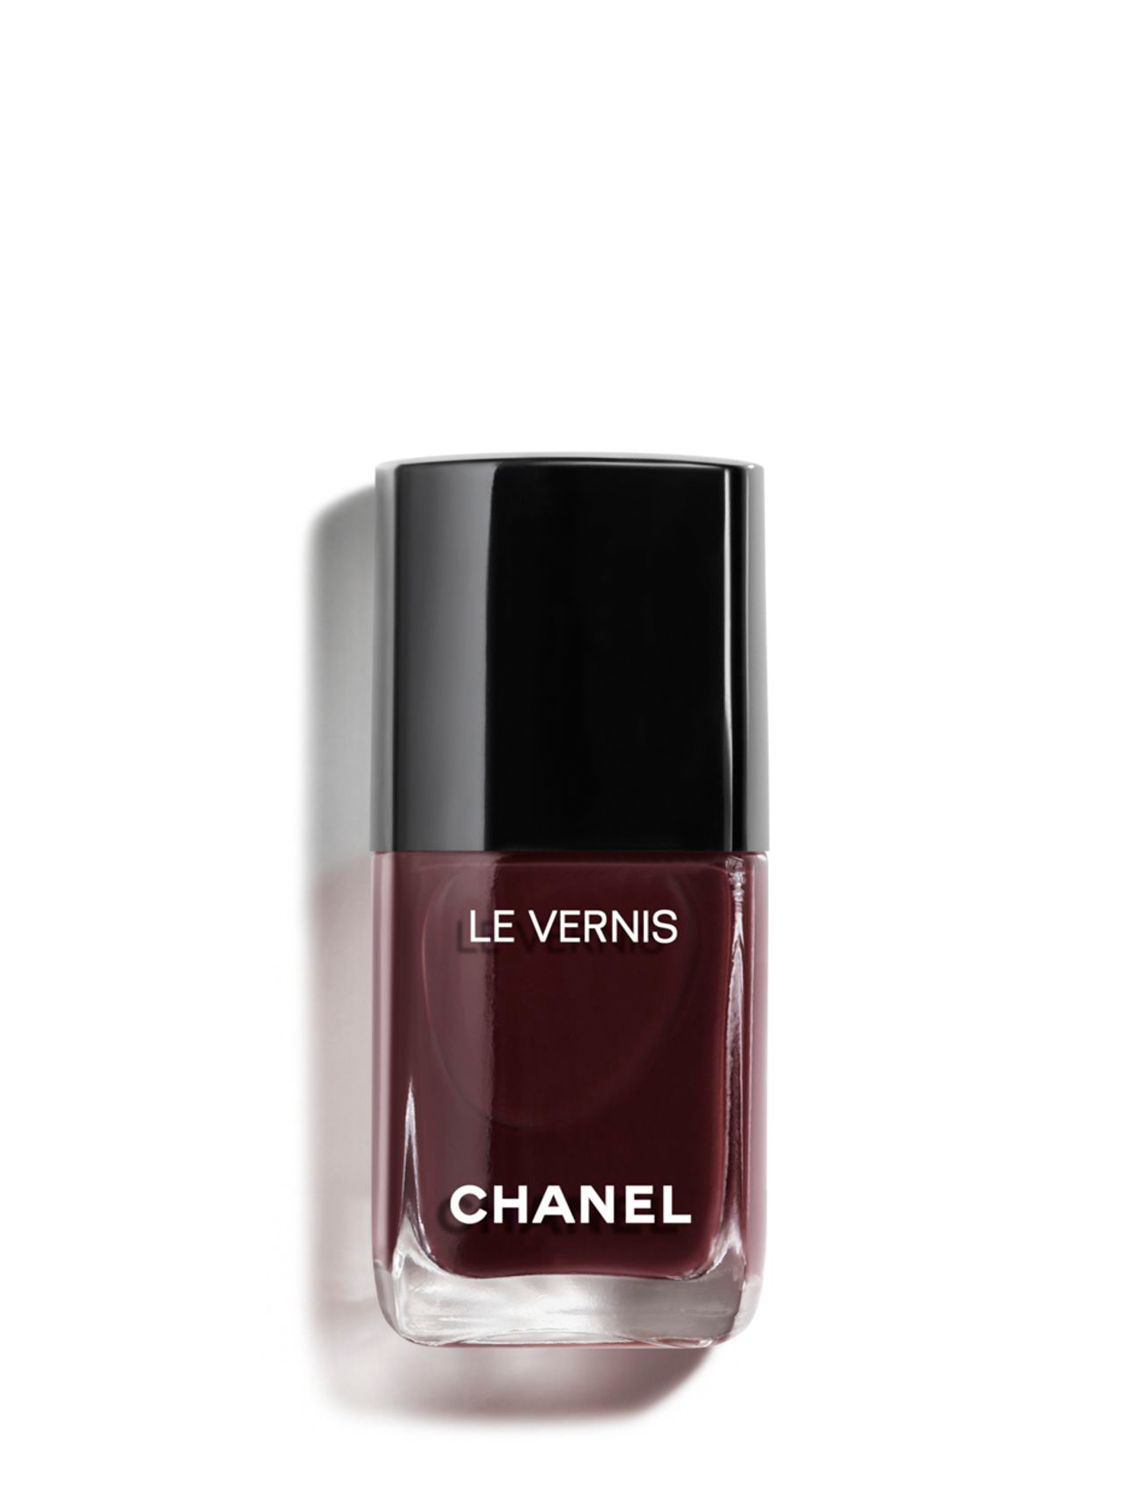 Chanel le vernis nail polish review for Christmas 2022